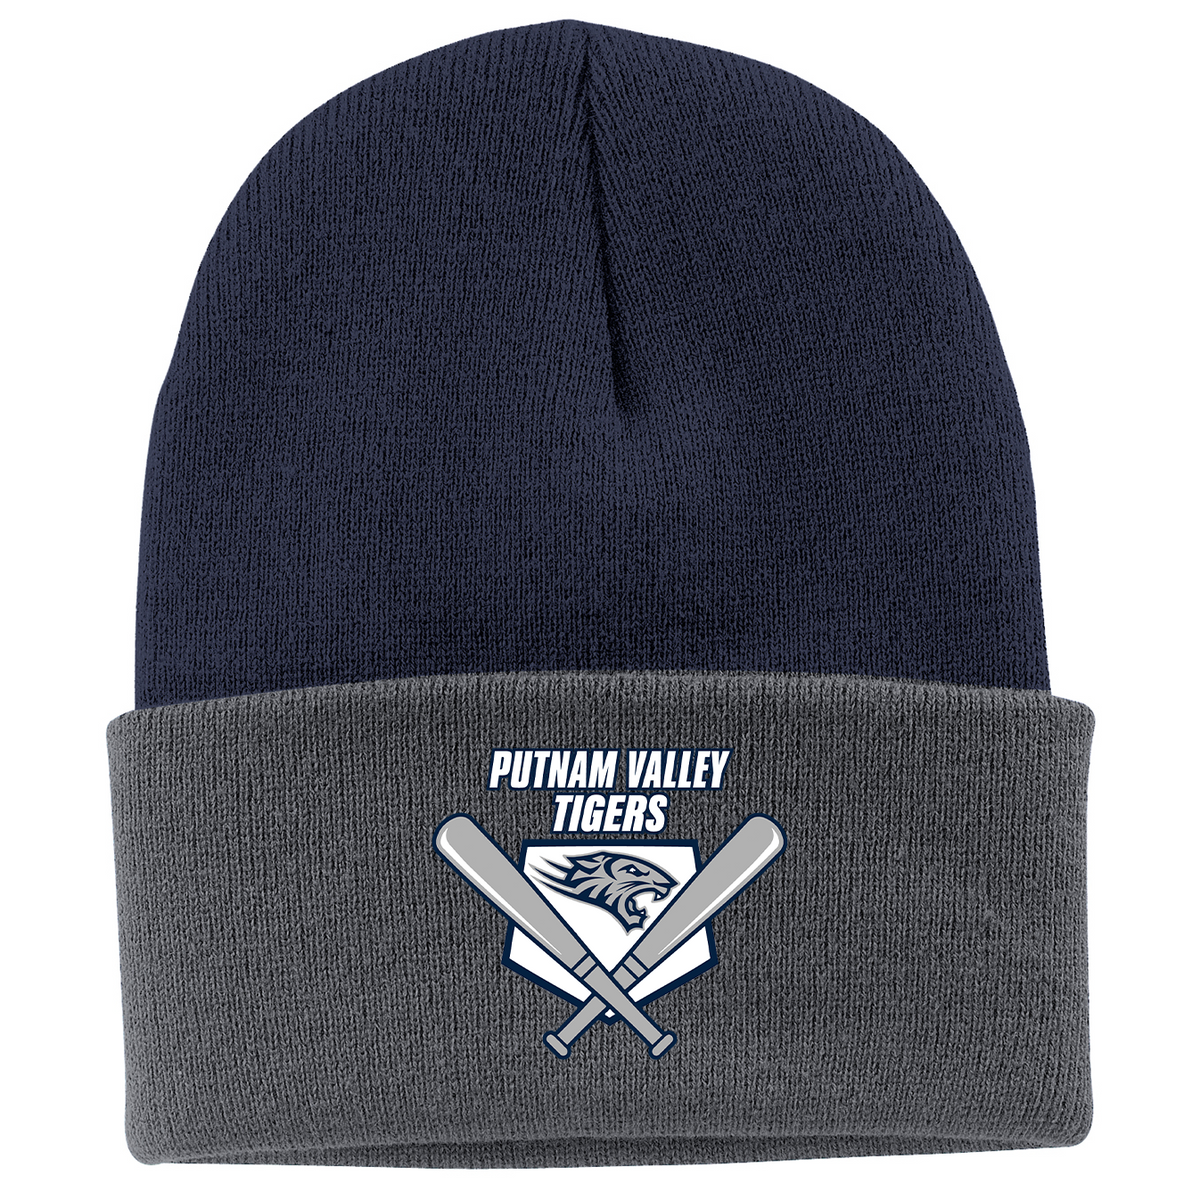 Putnam Valley Baseball Knit Beanie